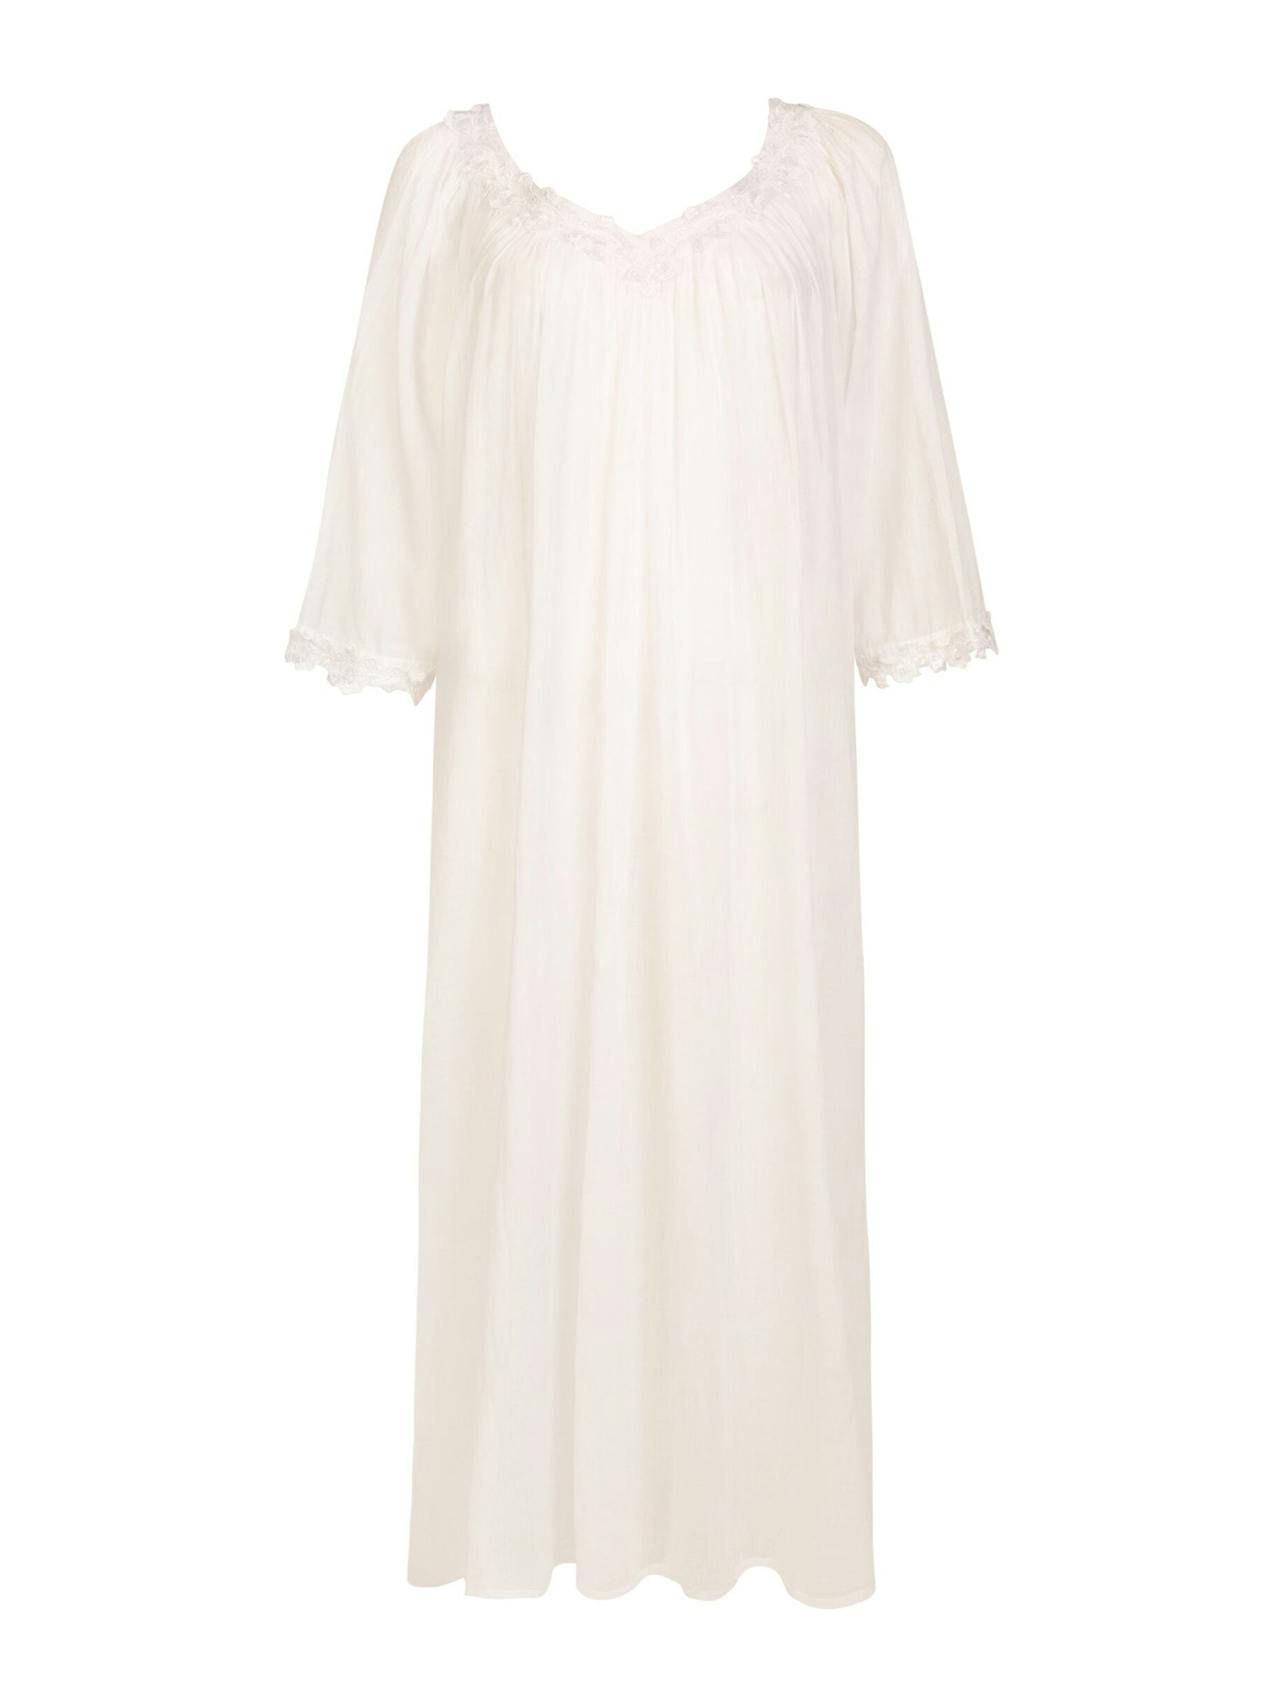 Cotton full length Julia nightdress